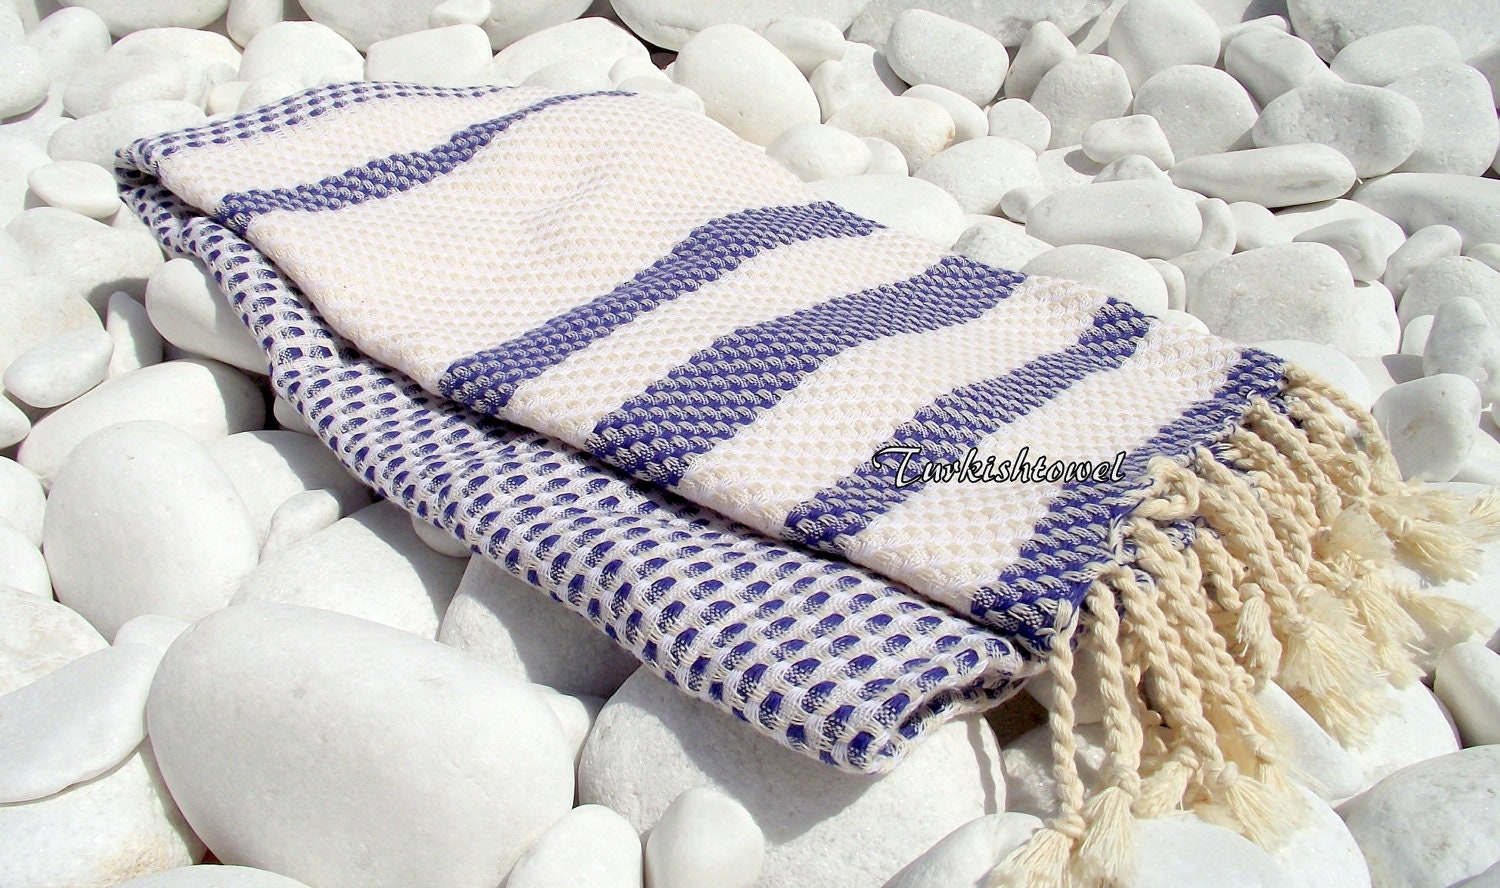 Turkishtowel-Highest Quality Pure Organic Cotton,Hand Woven,Bath,Beach,Spa,Yoga Towel or Sarong-Mathing-Natural Cream and Navy,Sailor Blue